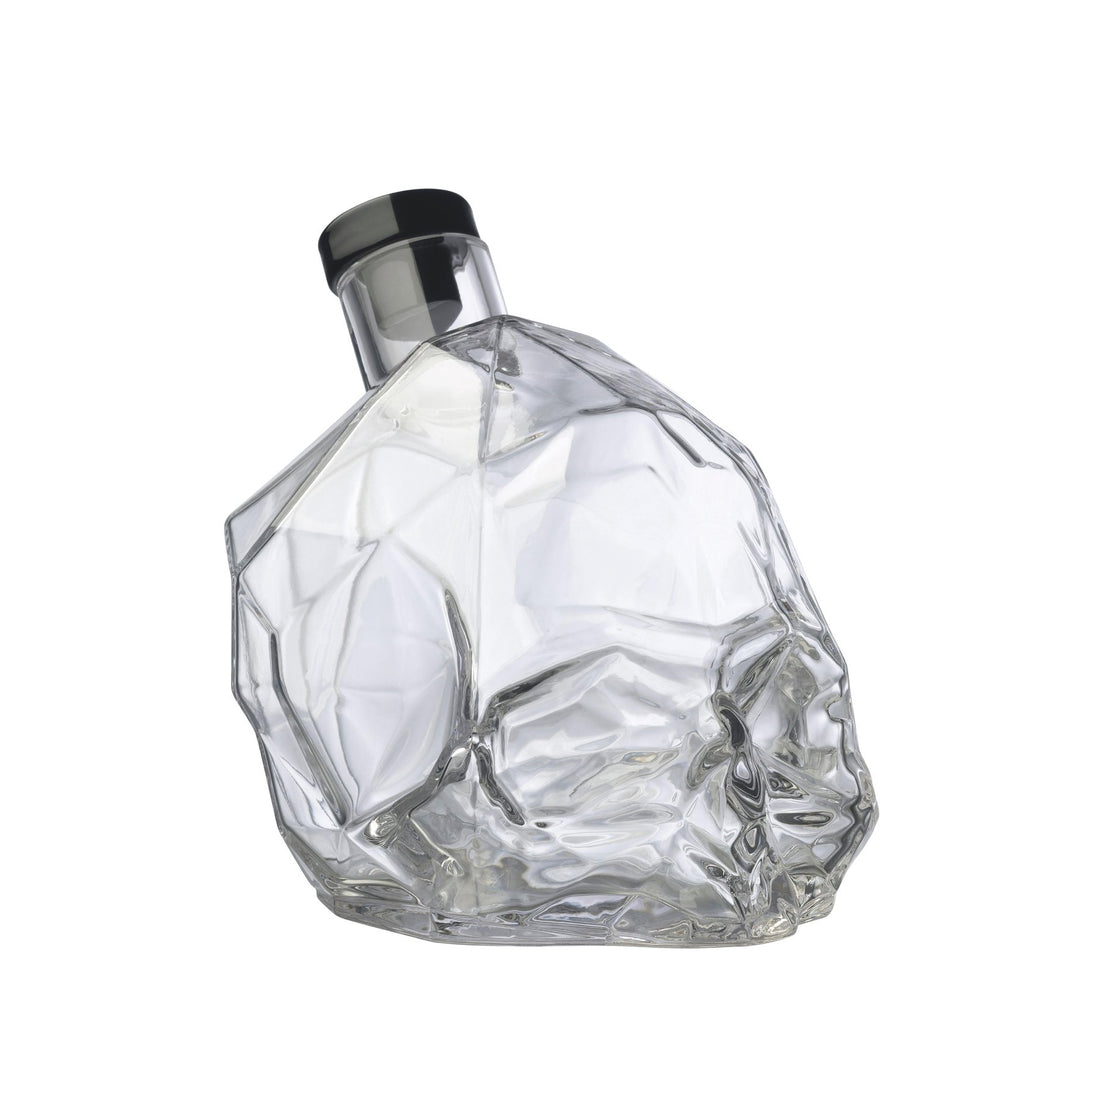 NUDE Memento Mori skull shaped whisky bottle empty side view